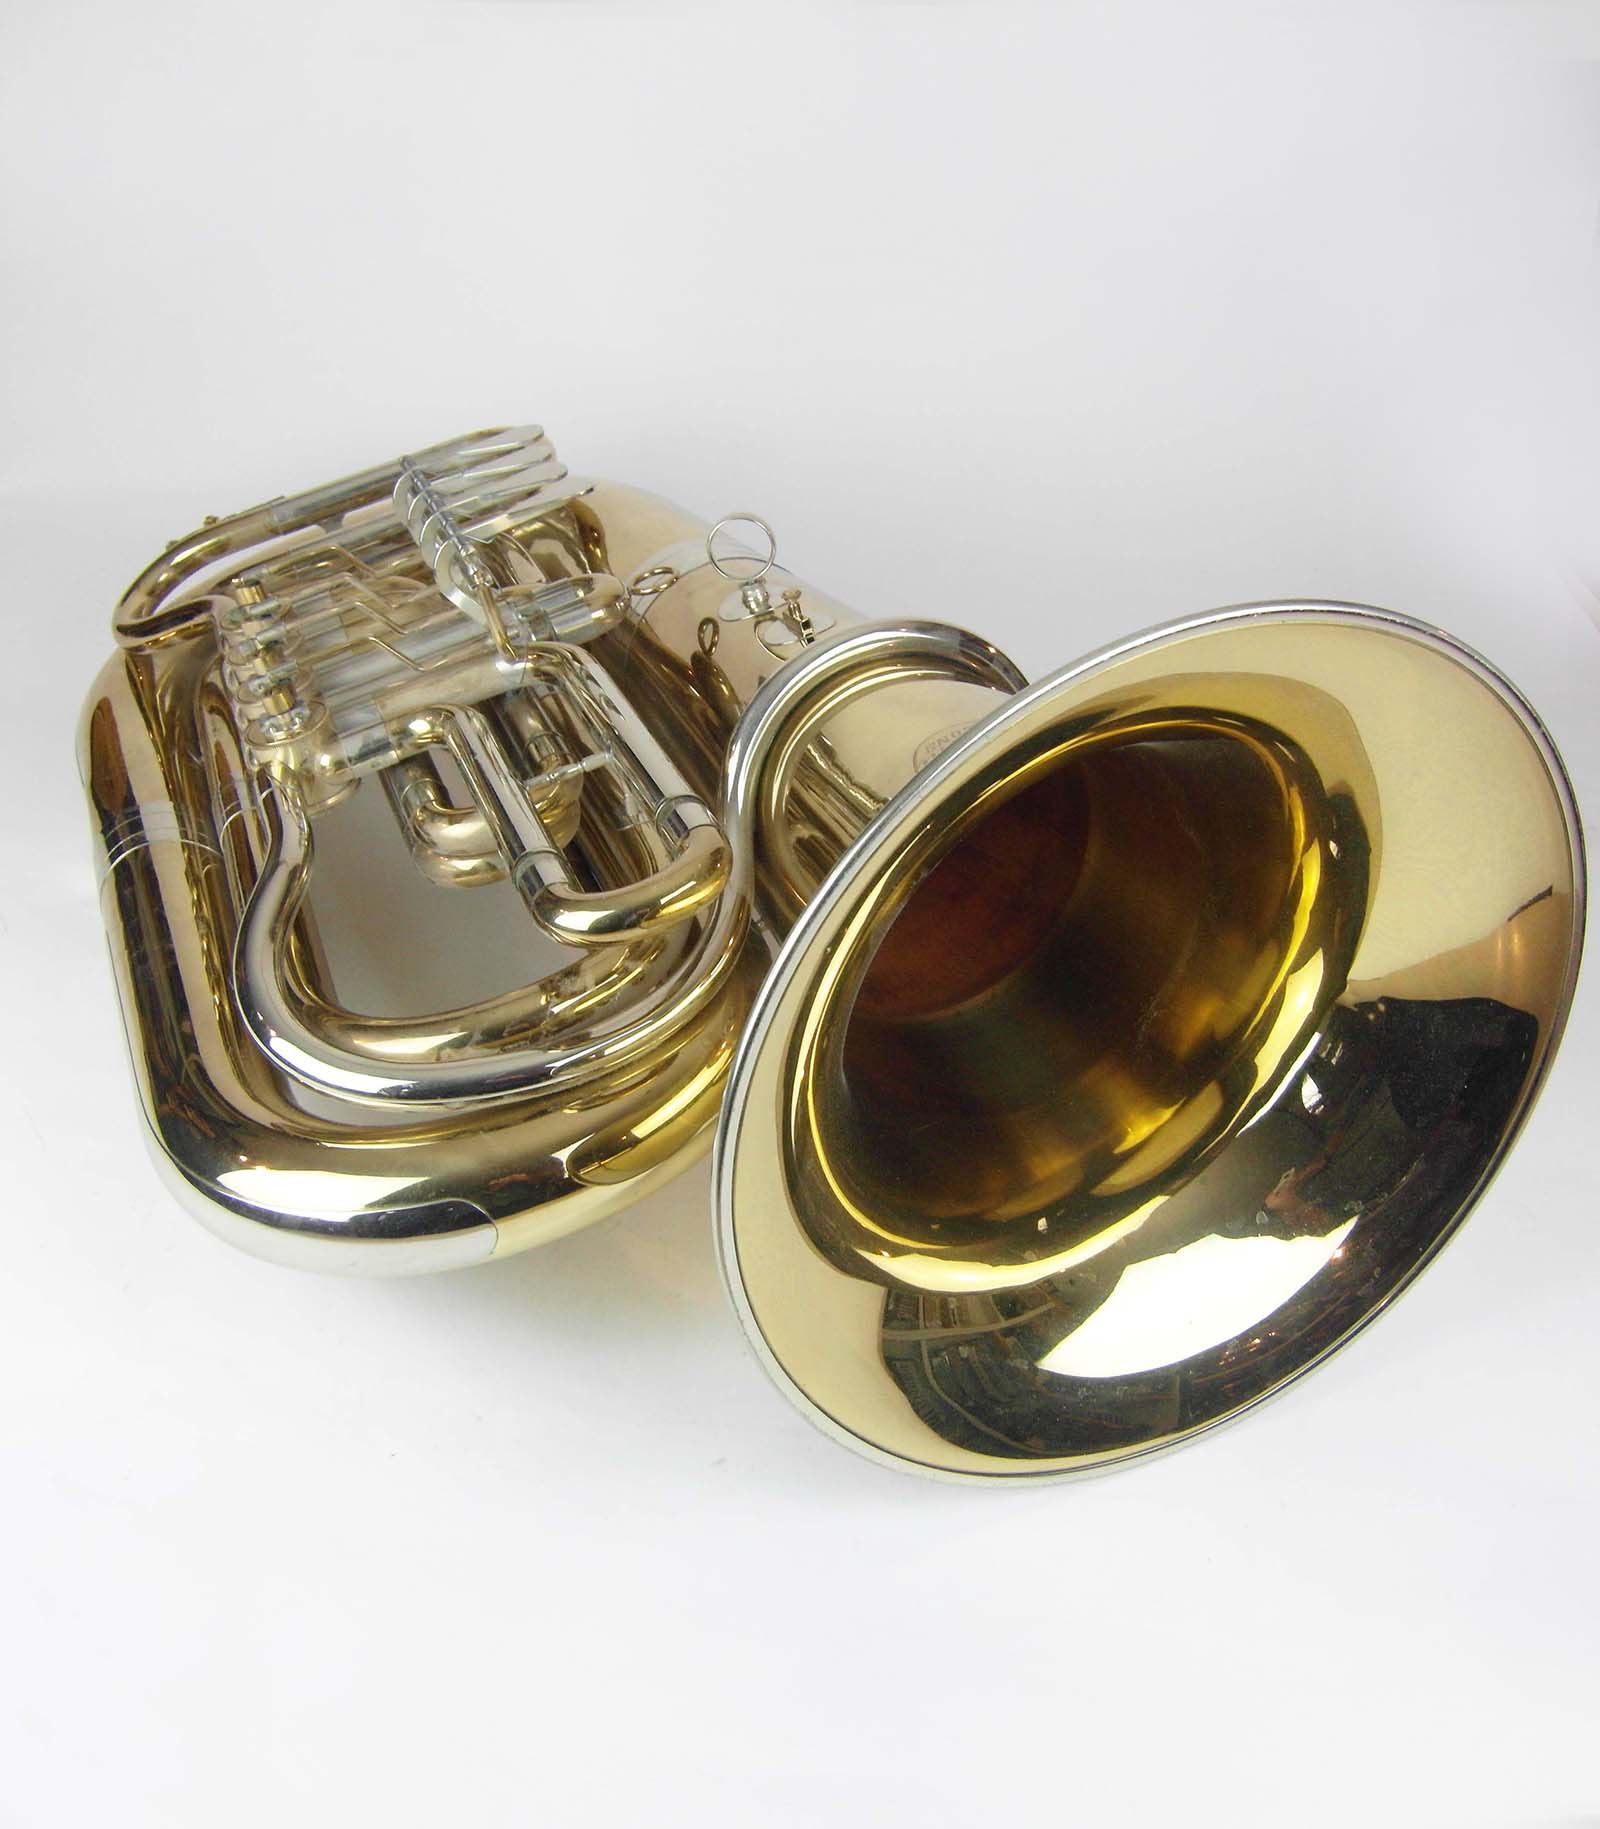 Tuba ars musica der musikladen münchen sendling vintage musikinstrumente